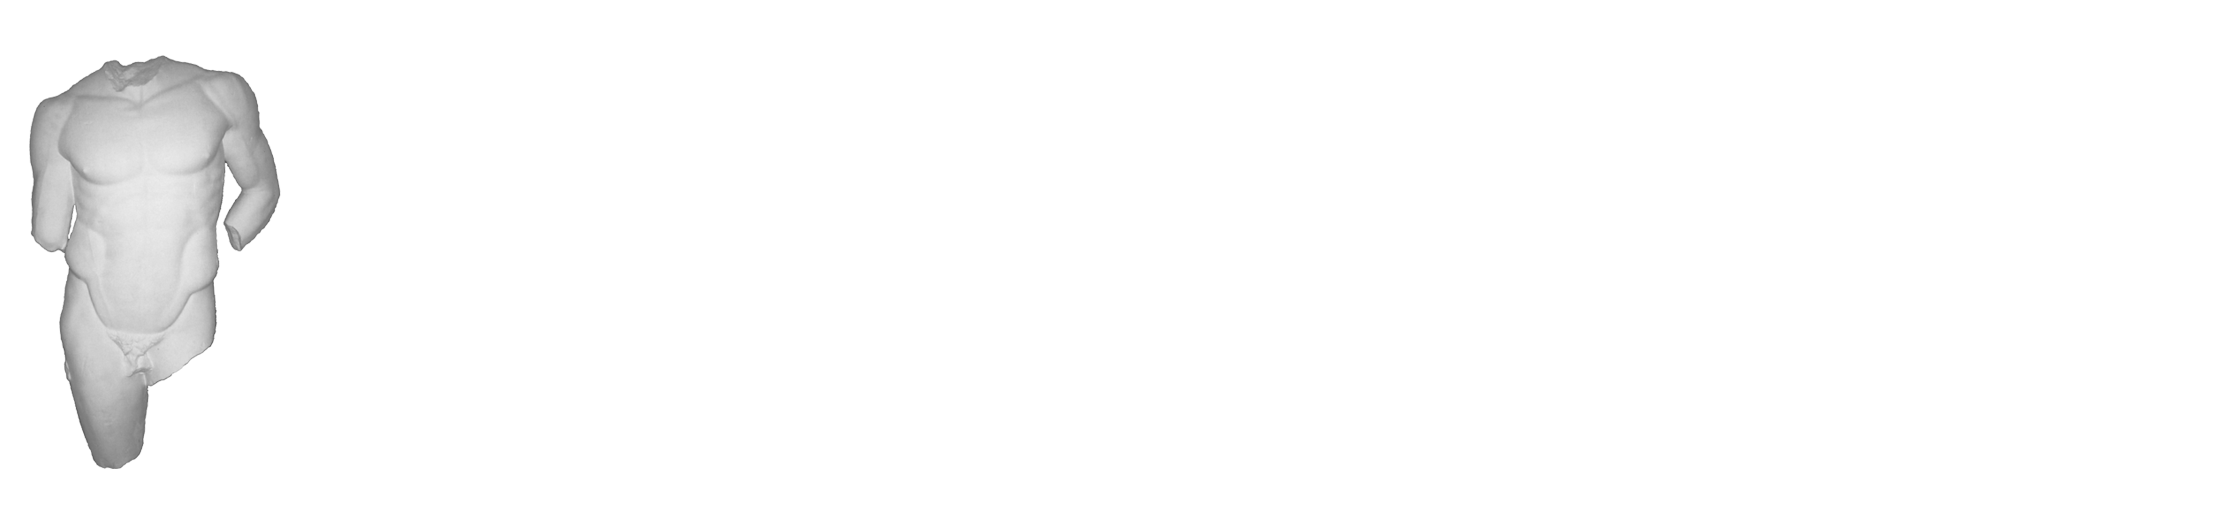 FELIX FORRER GmbH